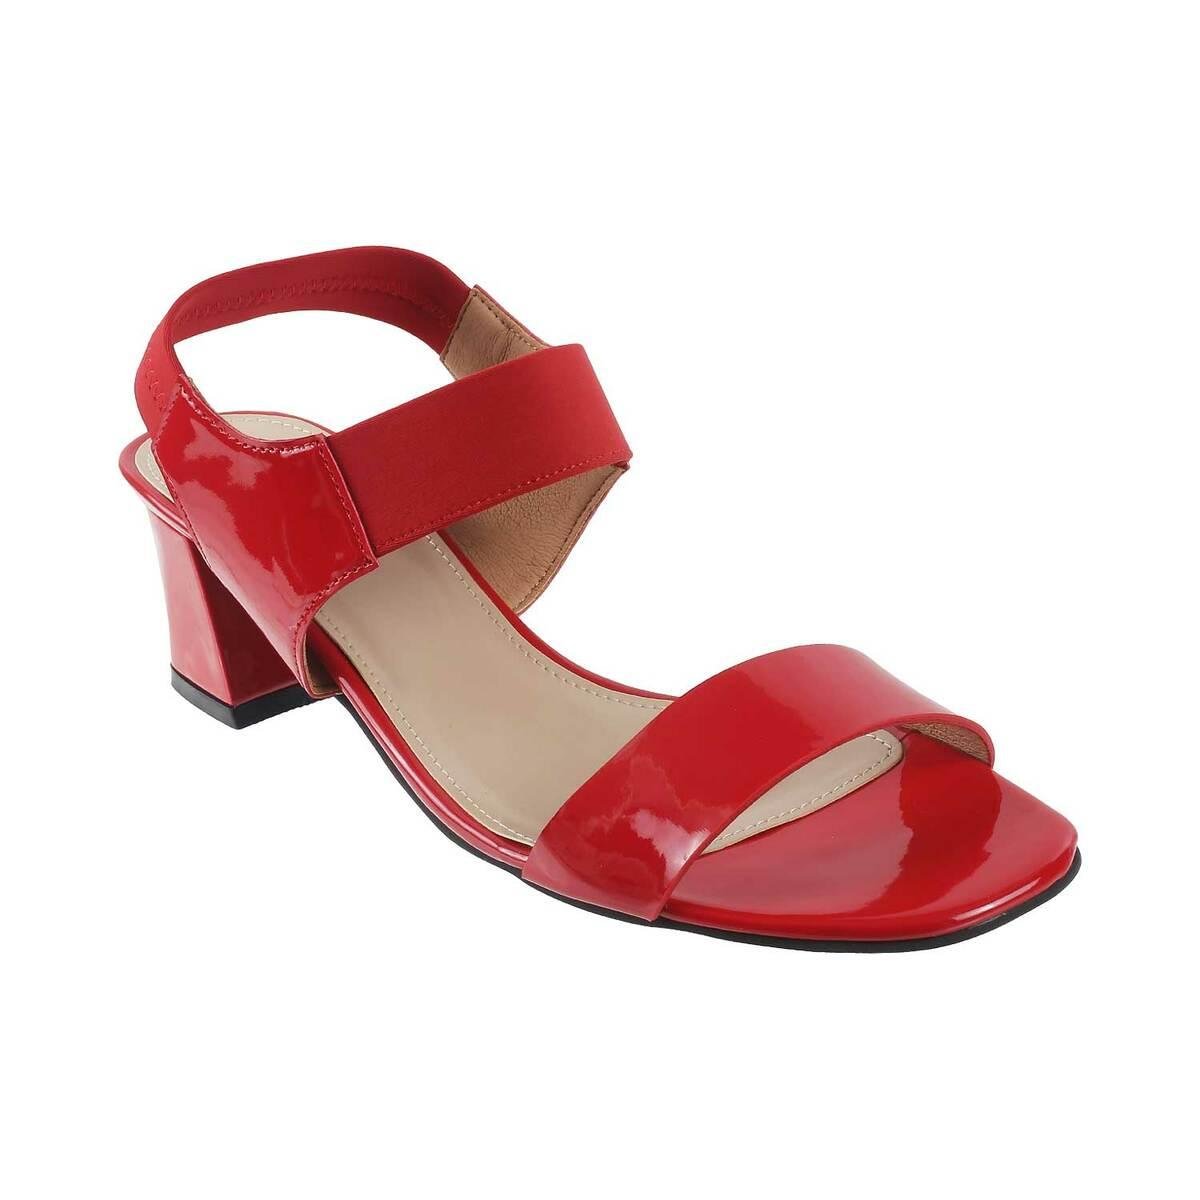 Pimkie block heeled sandals in red | ASOS